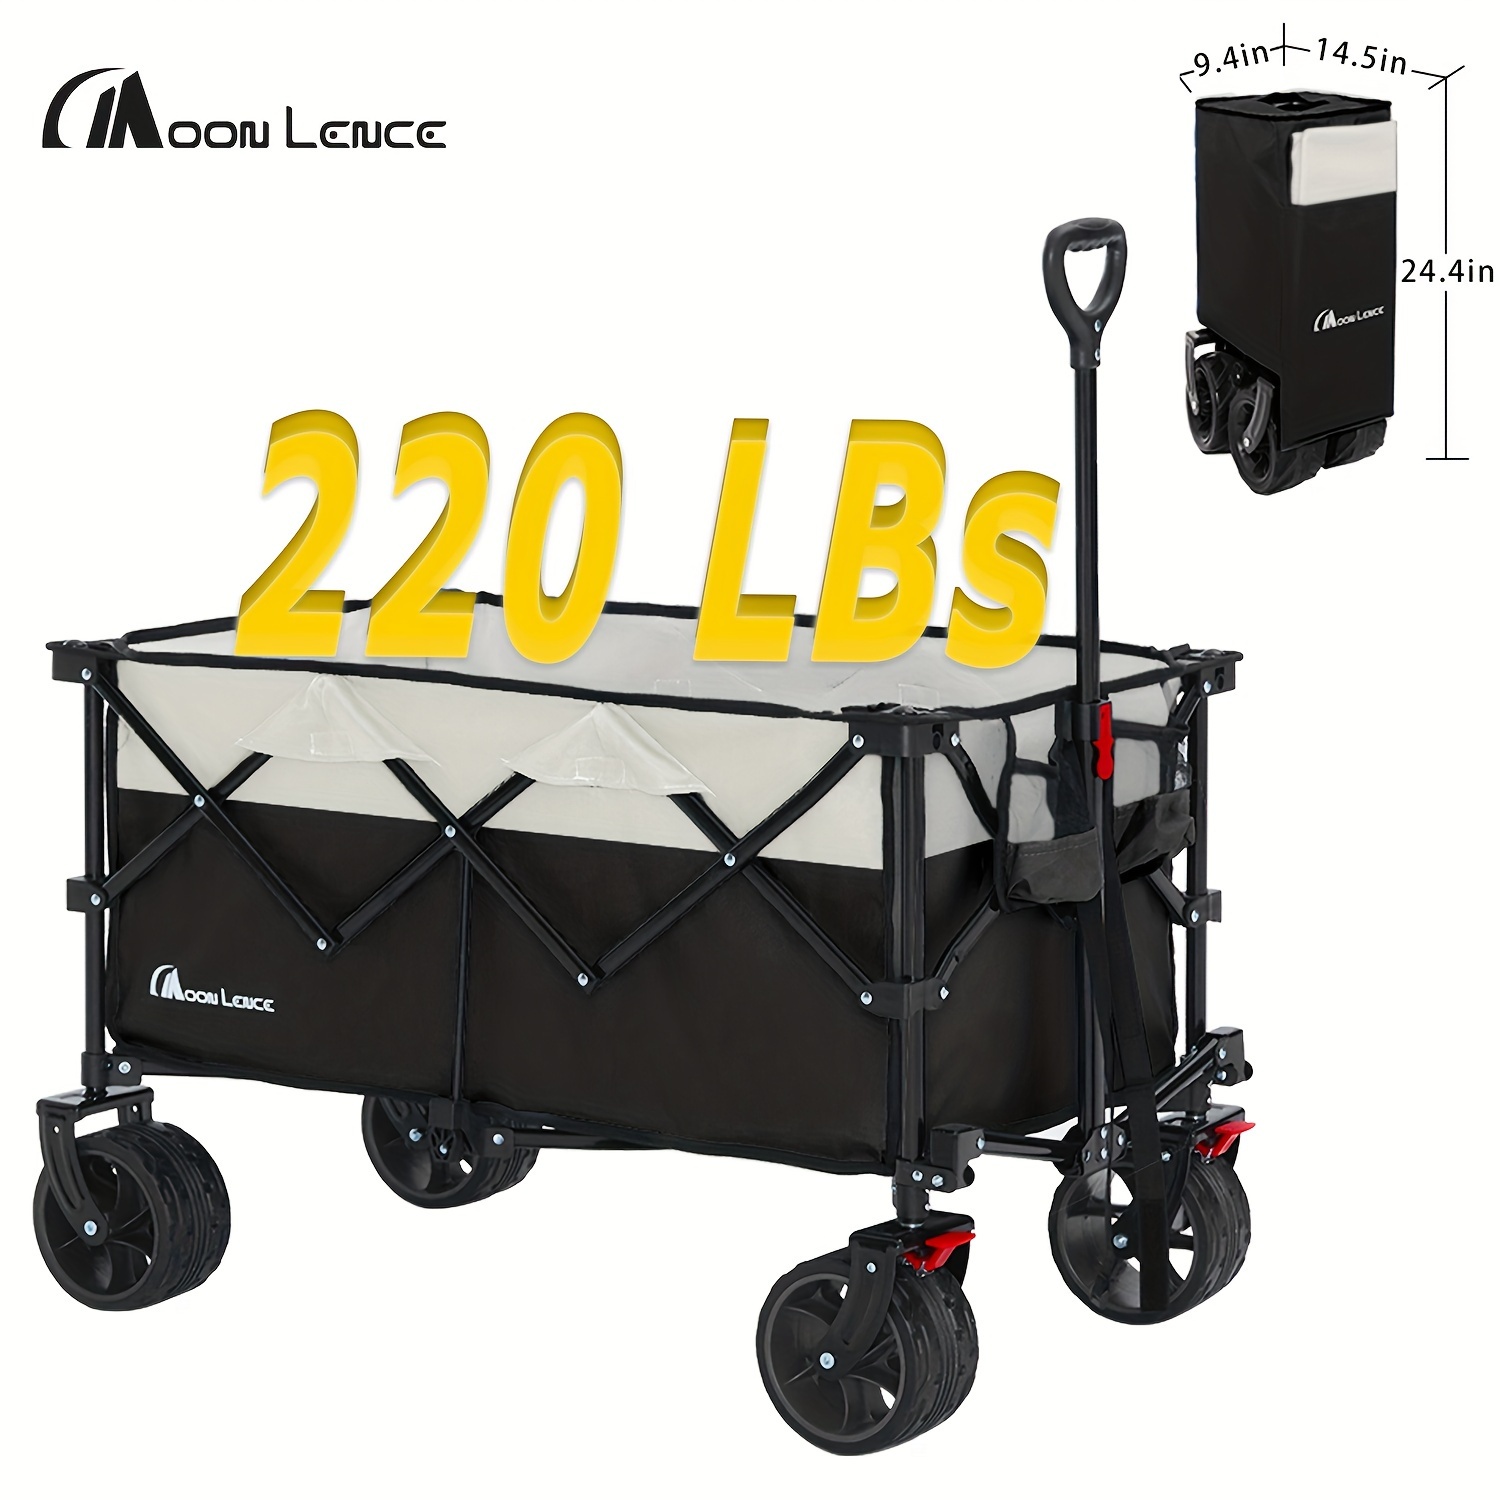 

Moon Lence Collapsible Folding Wagon Cart Heavy Duty Folding Garden Portable Hand Cart With All-terrain Beach Wheels, Adjustable Handle & Drink Holders